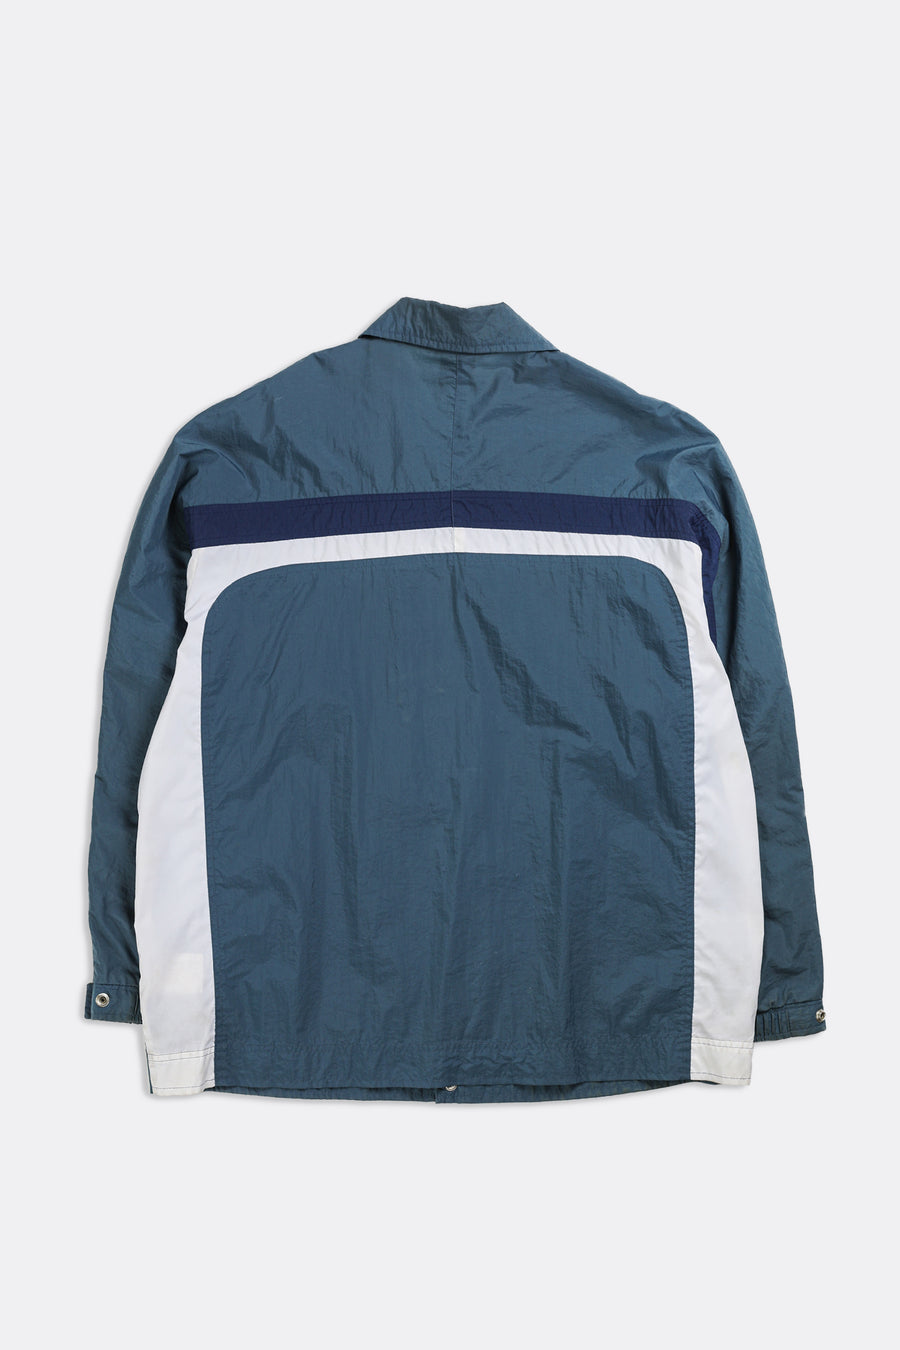 Vintage Nike Collared Windbreaker Jacket